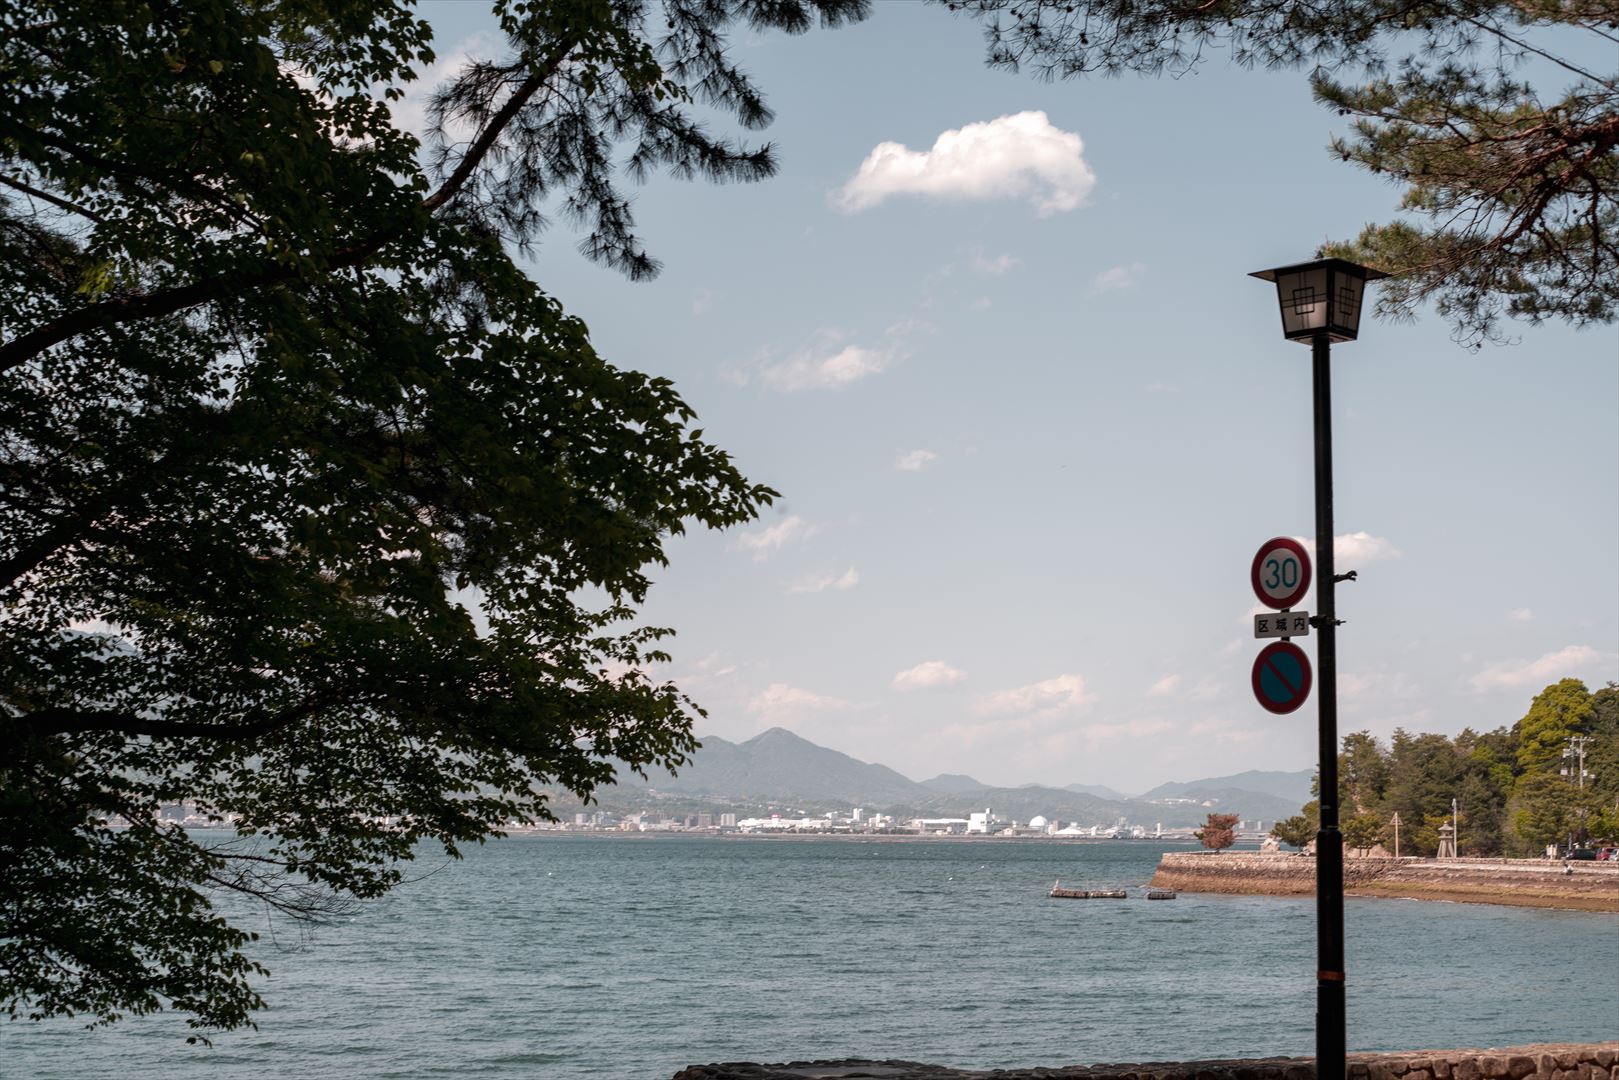 α7Riiとオールドレンズ。宮島の海と街灯。街灯もノスタルジックな雰囲気の見た目をしています。